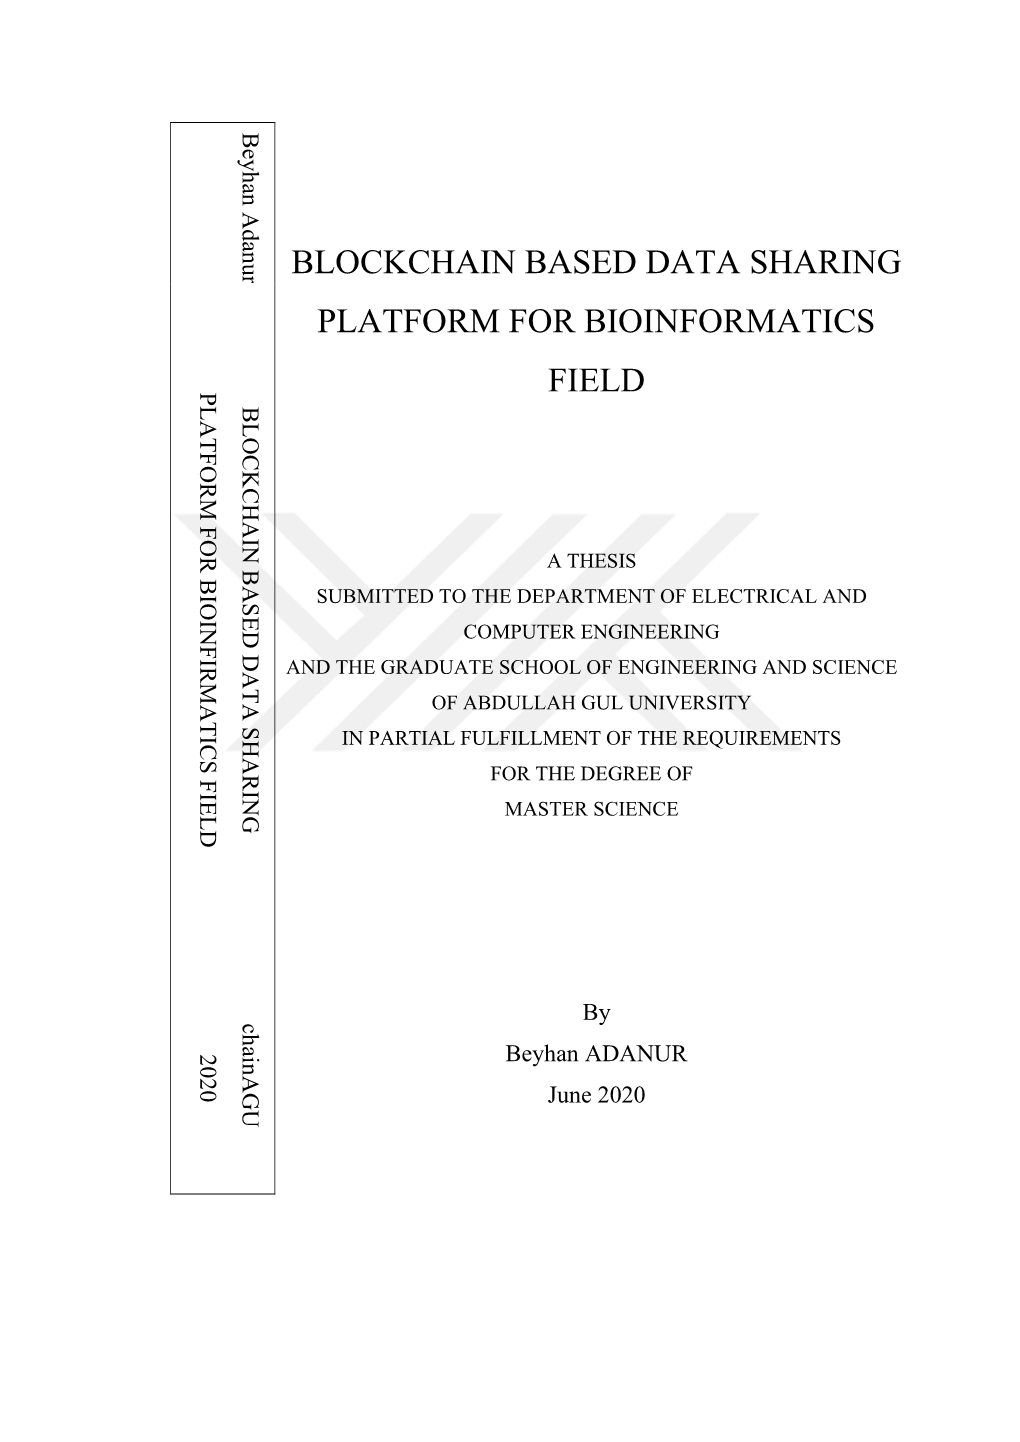 Blockchain Based Data Sharing Platform for Bioinformatics Field